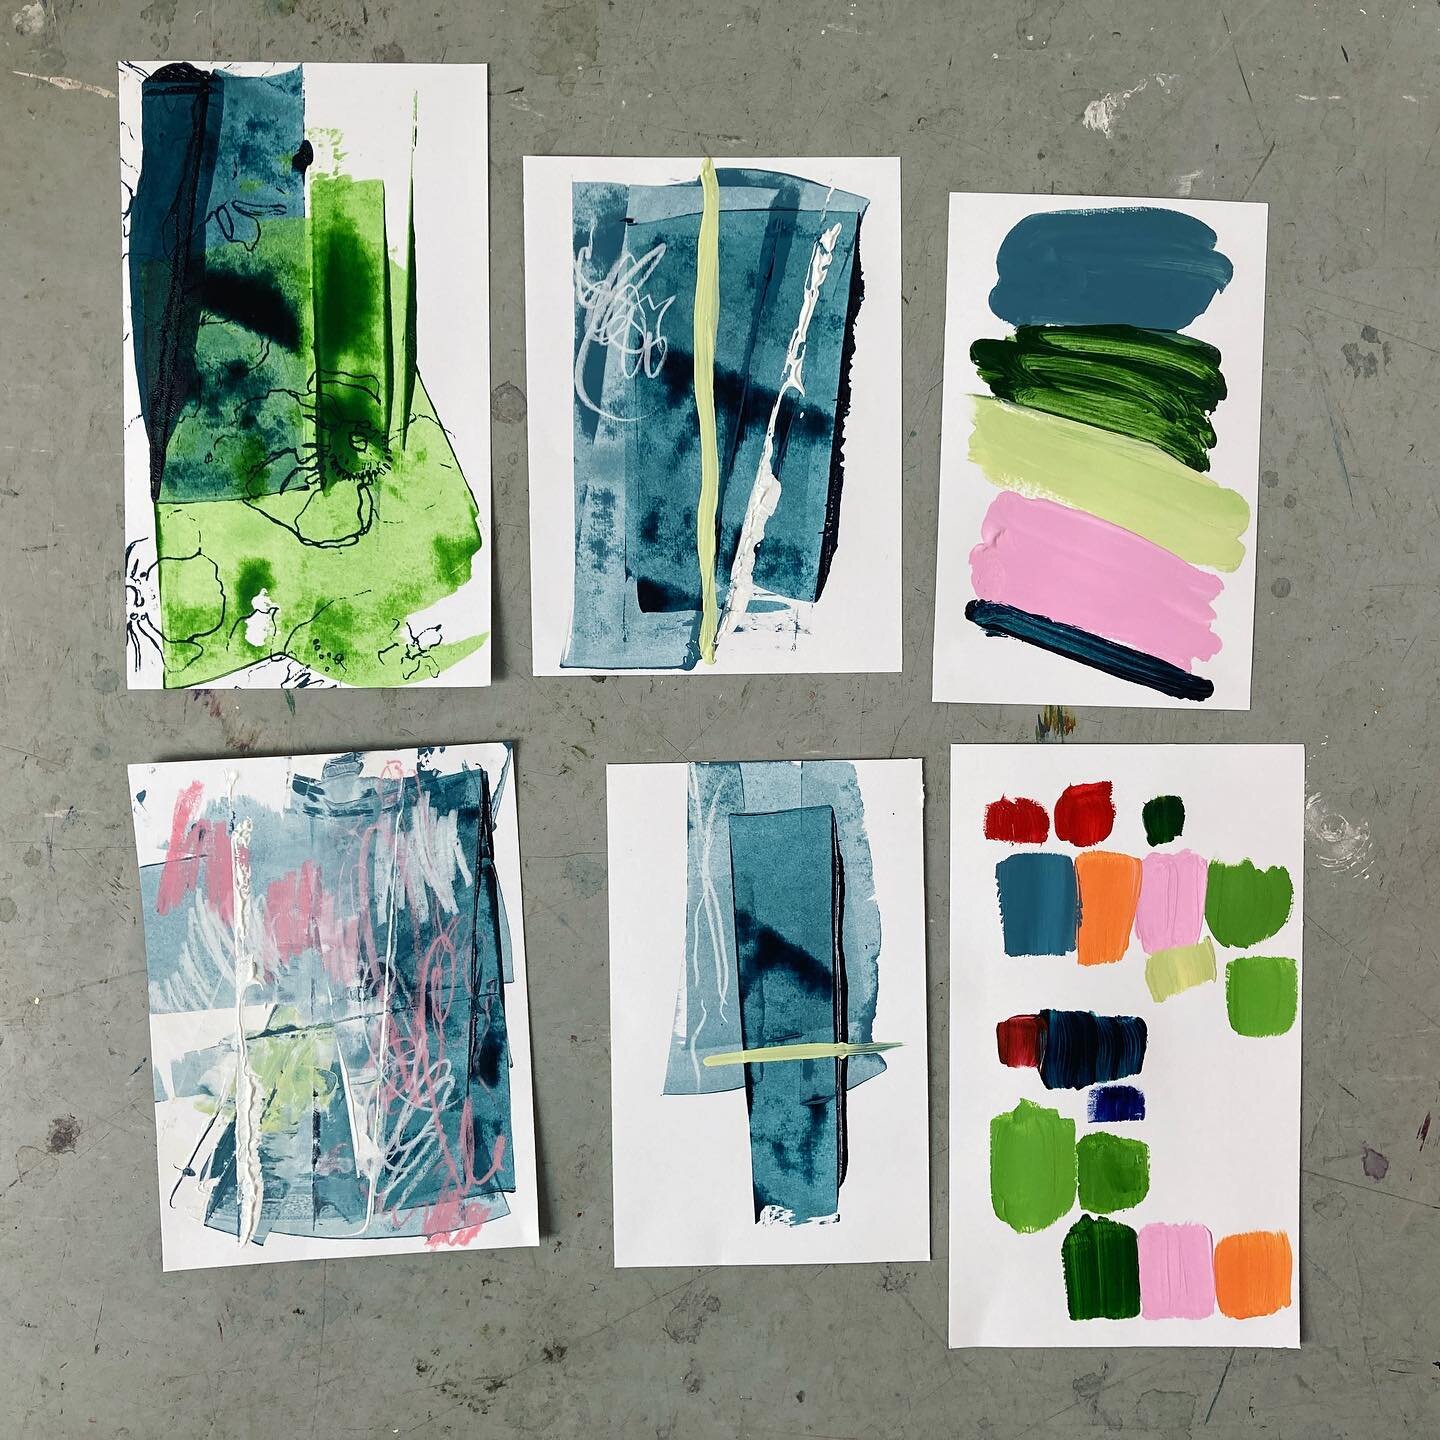 Testing colours, textures and layering. 🌿💙🌸🍊
.
.
.
.
.
.
.
.
.
.
.
.

#painting #sketch #botanical #peckhamartist #abstractart #primer_contemporary #emergingartist #artadvisory #screenprint #monoprint #colourtest